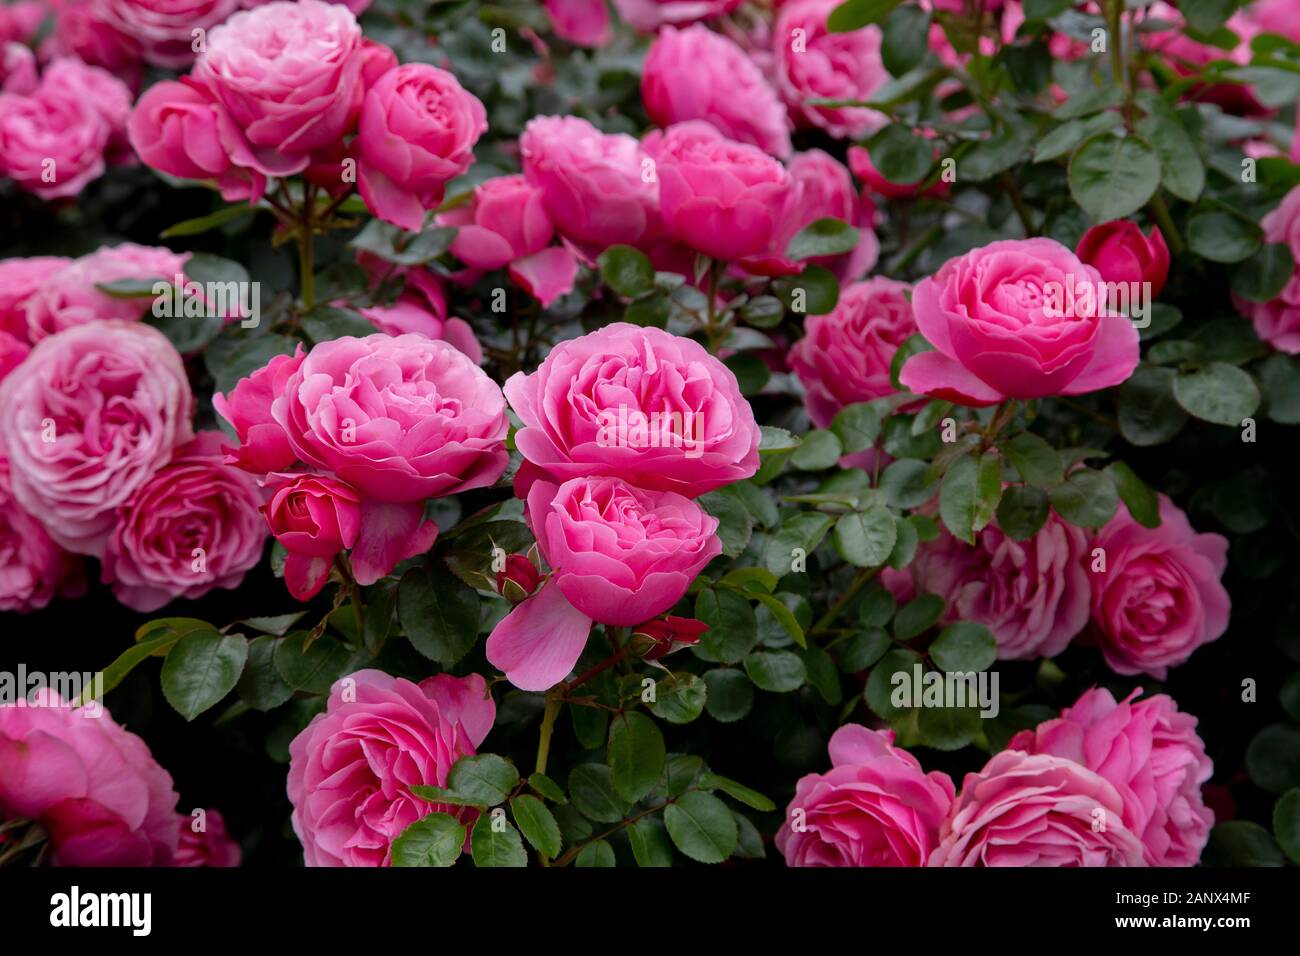 Leonardo Da Vinci - Floribunda Meilland Rose Stock Photo - Alamy